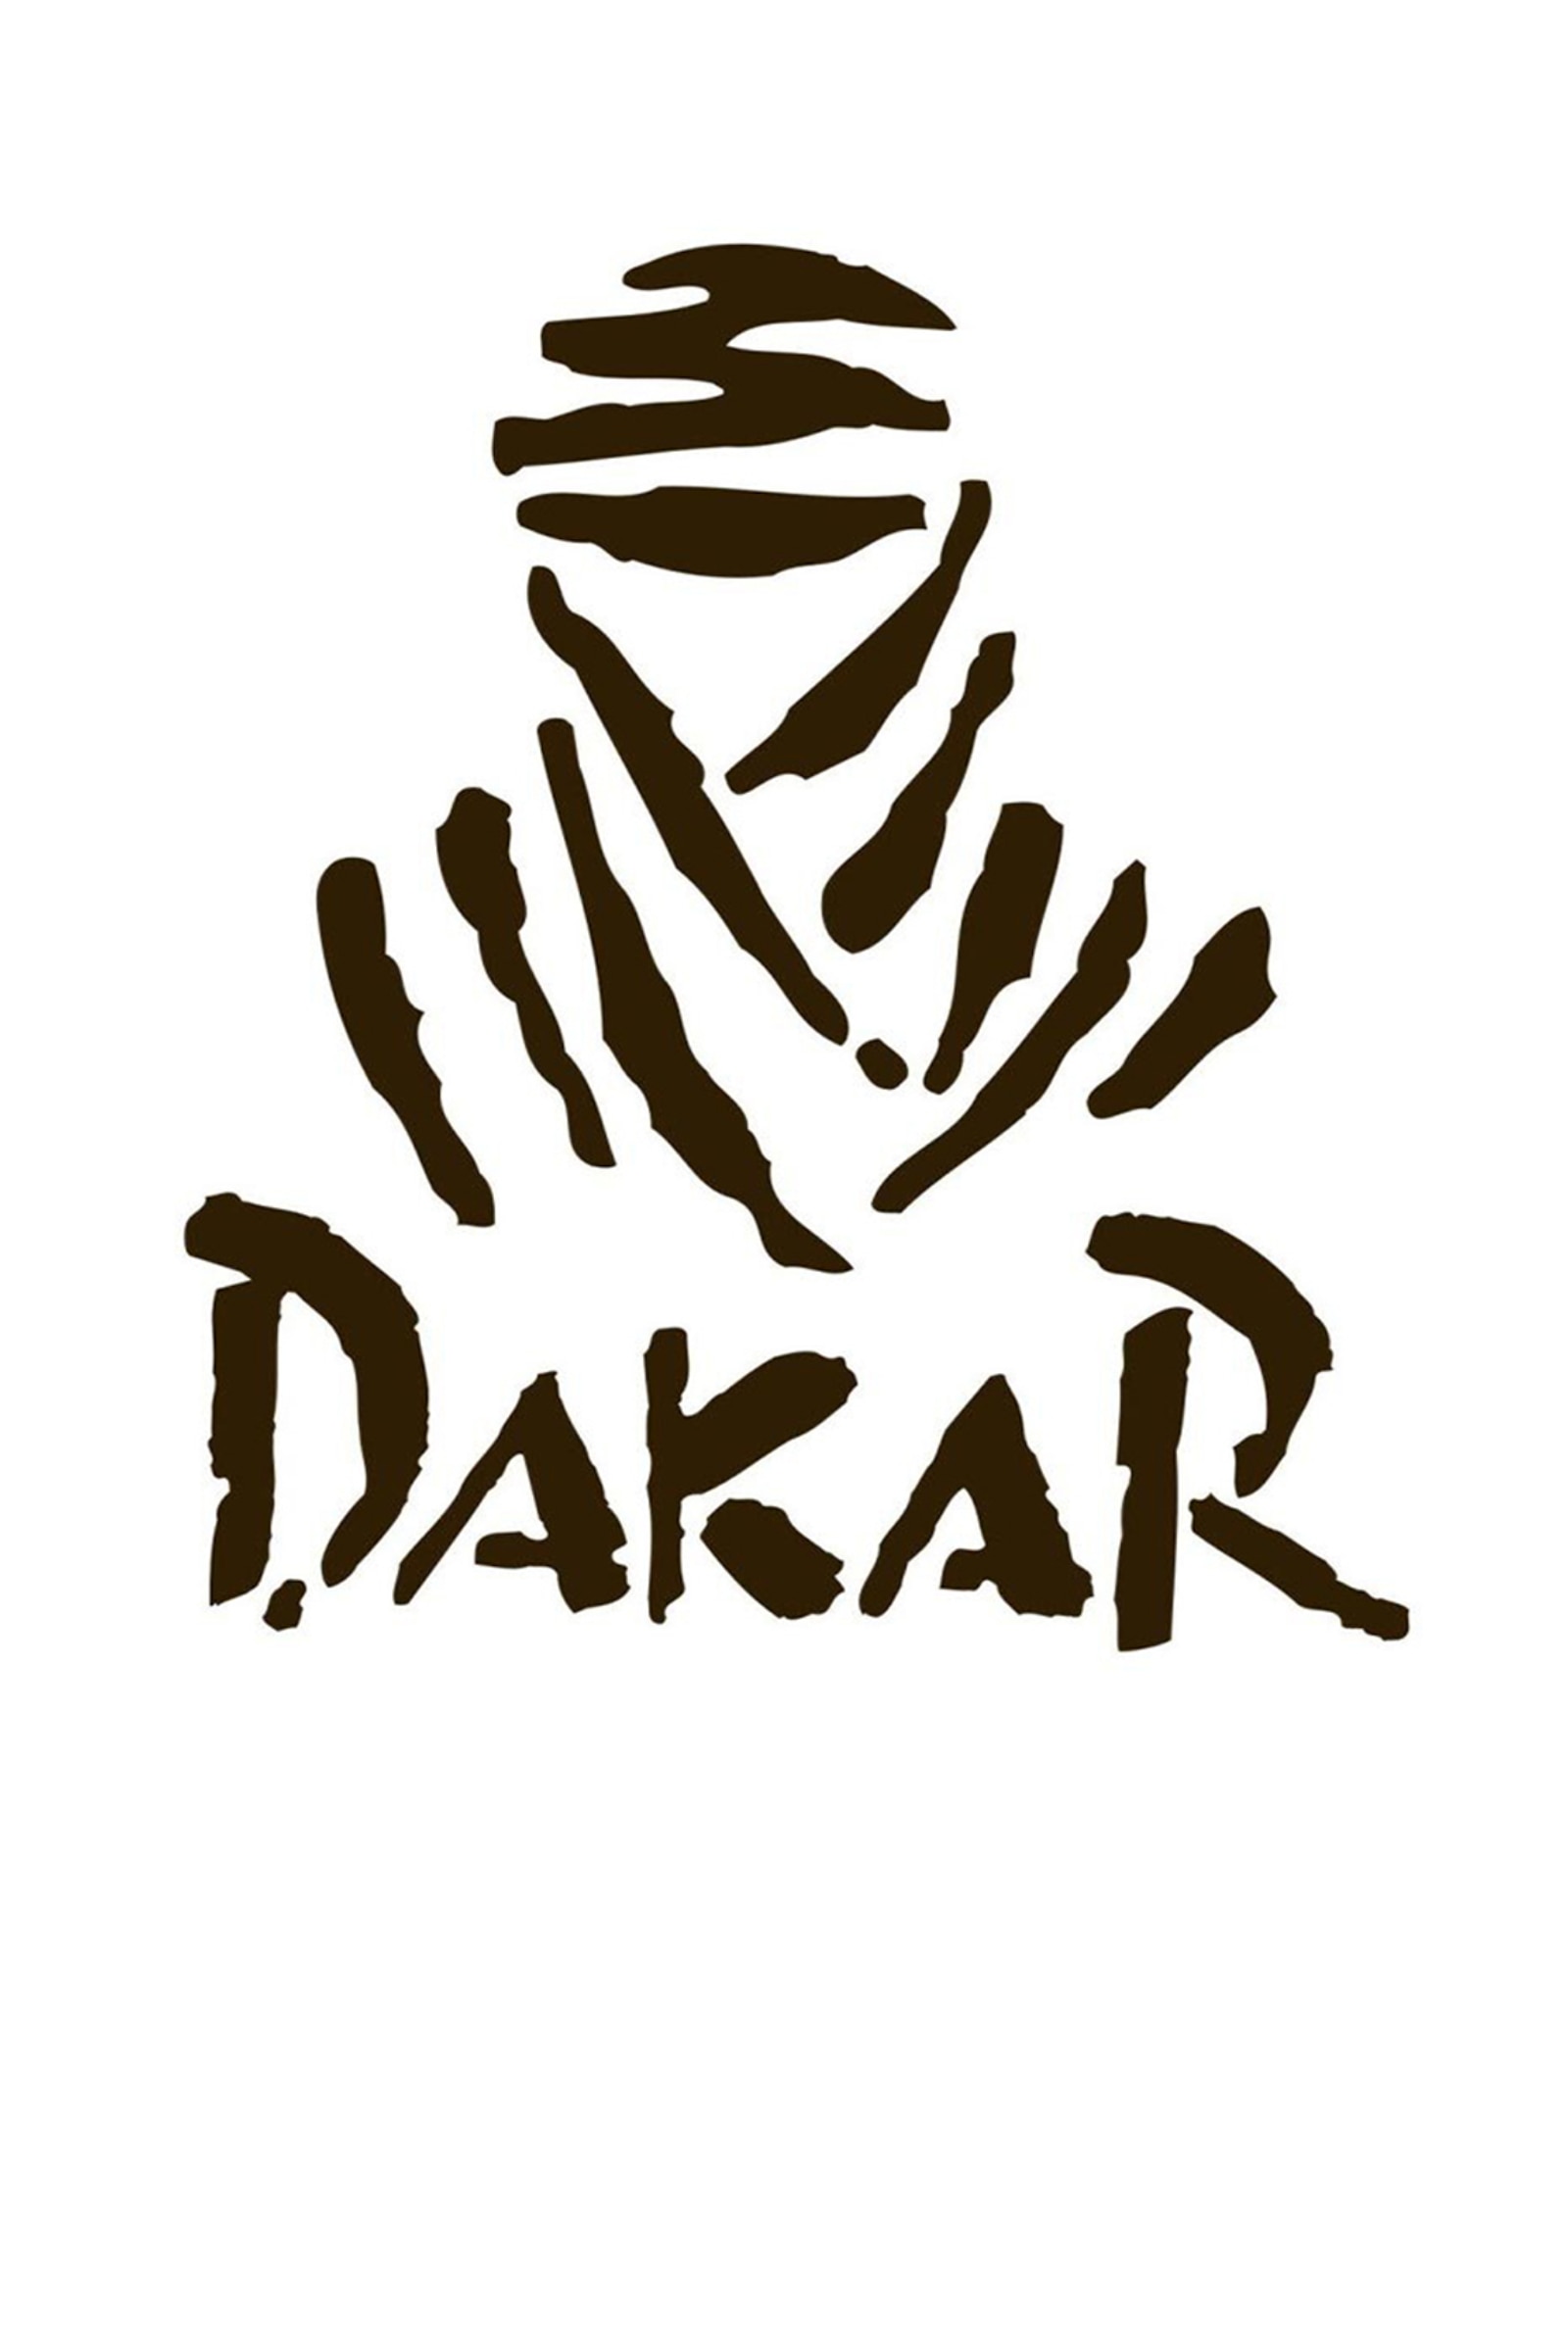 Dakar Rally Logo Png Transpar